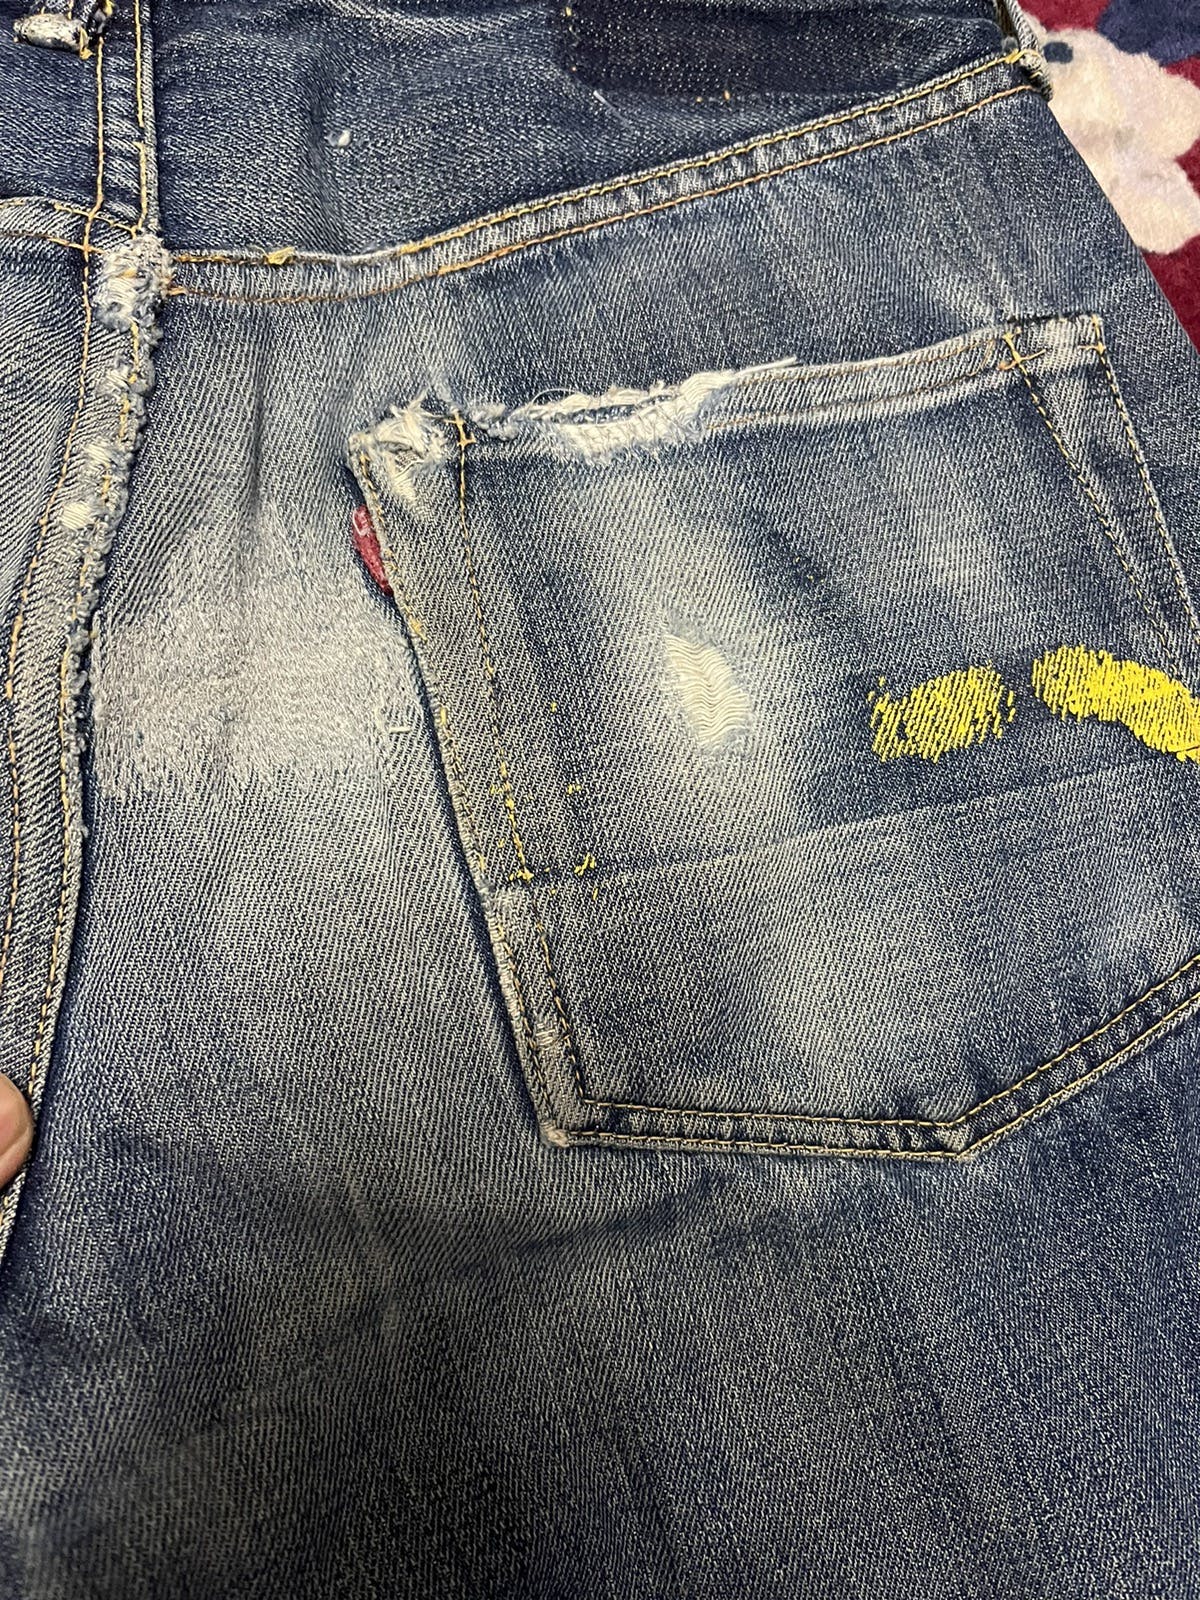 Yamane selevedge jeans distressed - 9